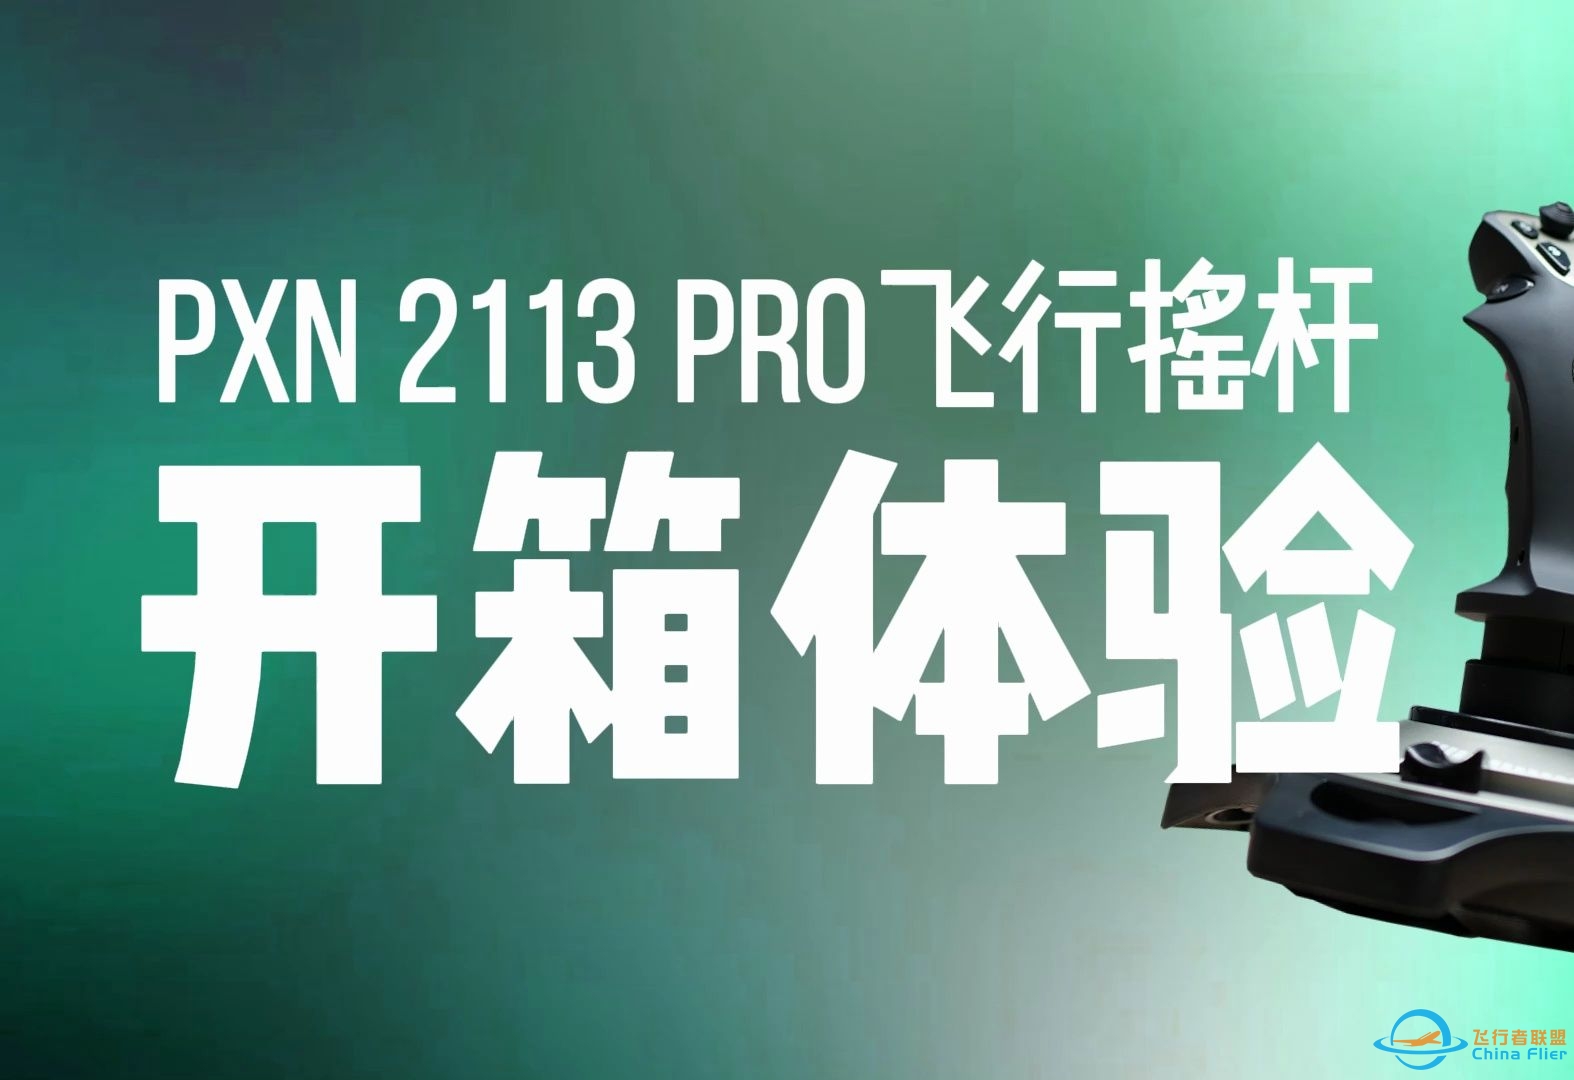 PXN 2113 Pro飞行摇杆开箱体验-9969 